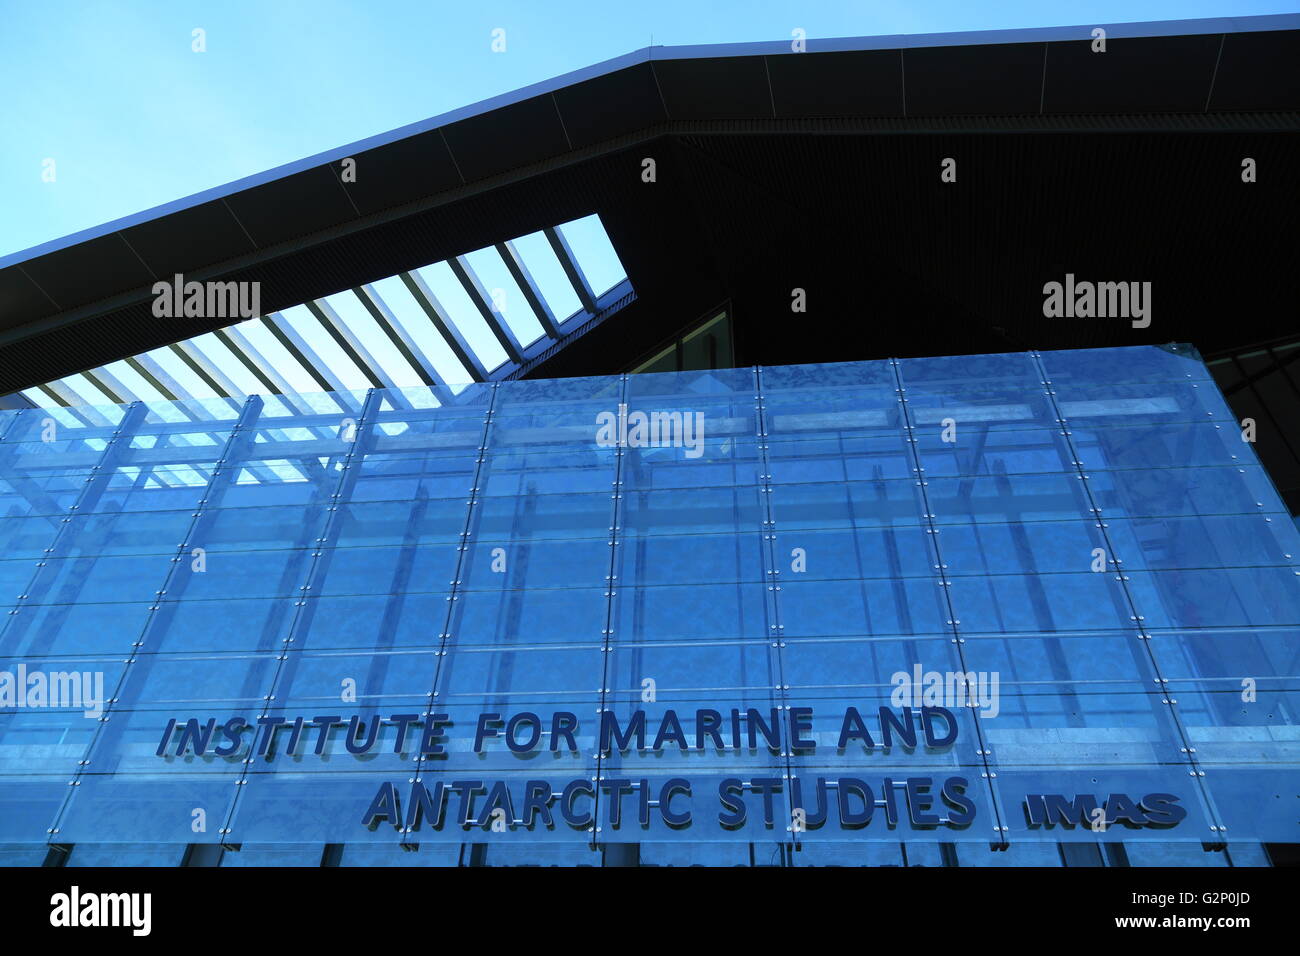 IMAS - Institute for Marine and Antarctic Studies - in Hobart, Tasmania, Australia. Stock Photo